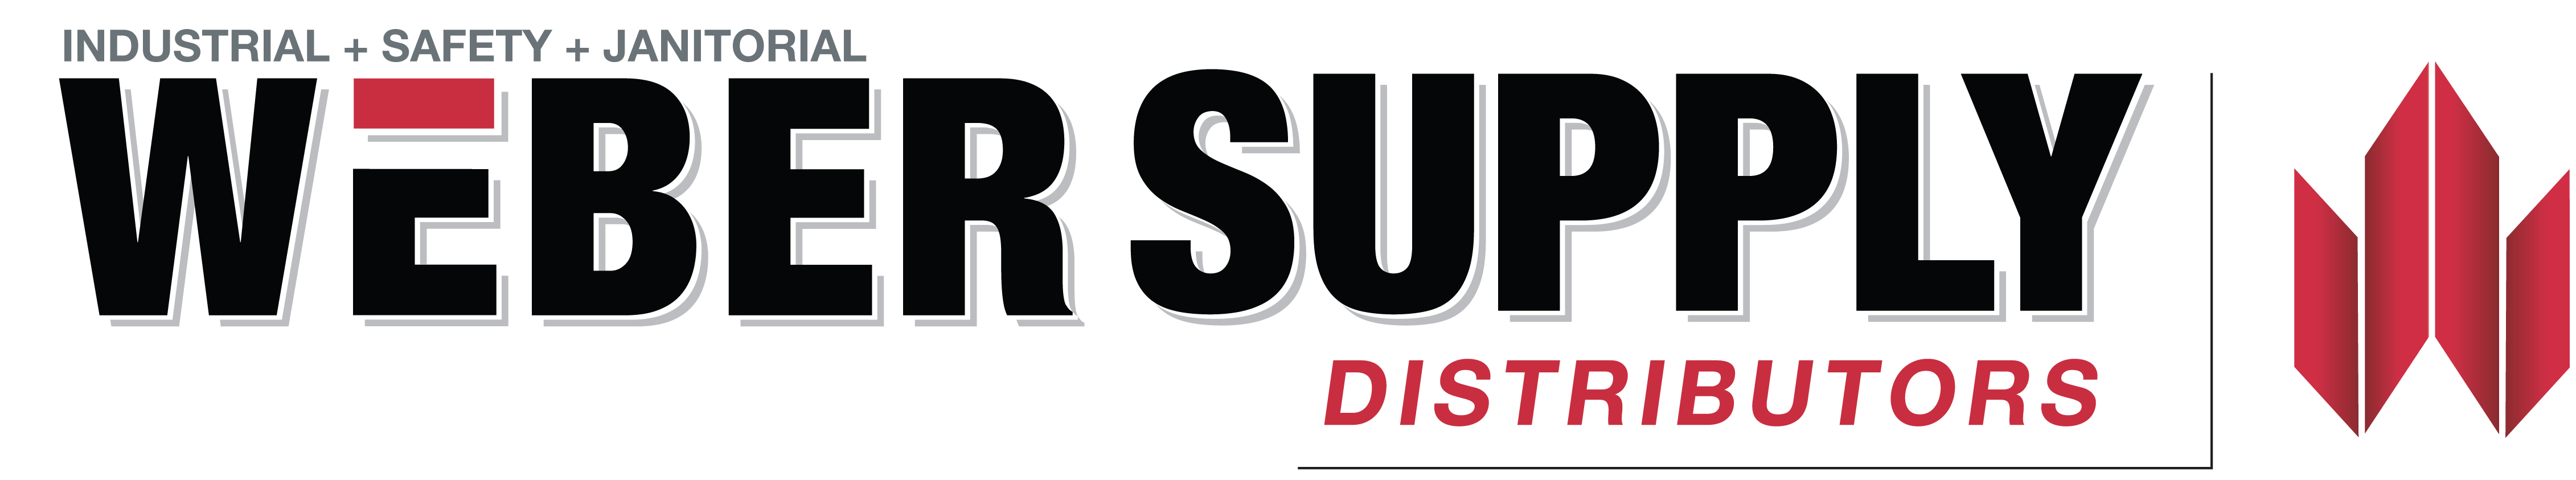 Weber Supply Industrial Distributor logo